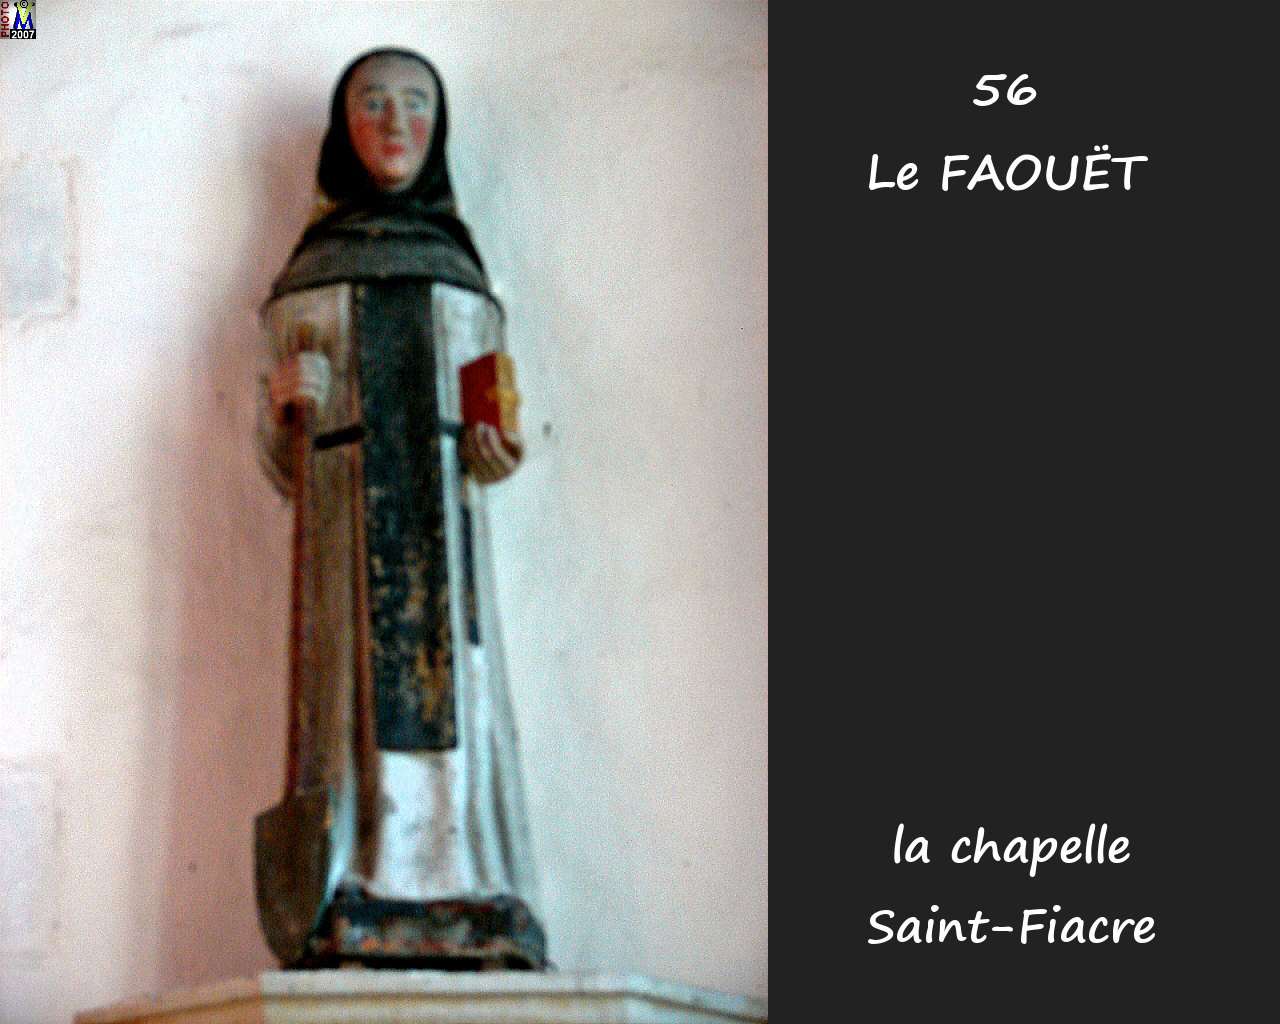 56FAOUET_chapelle-fiacre_328.jpg